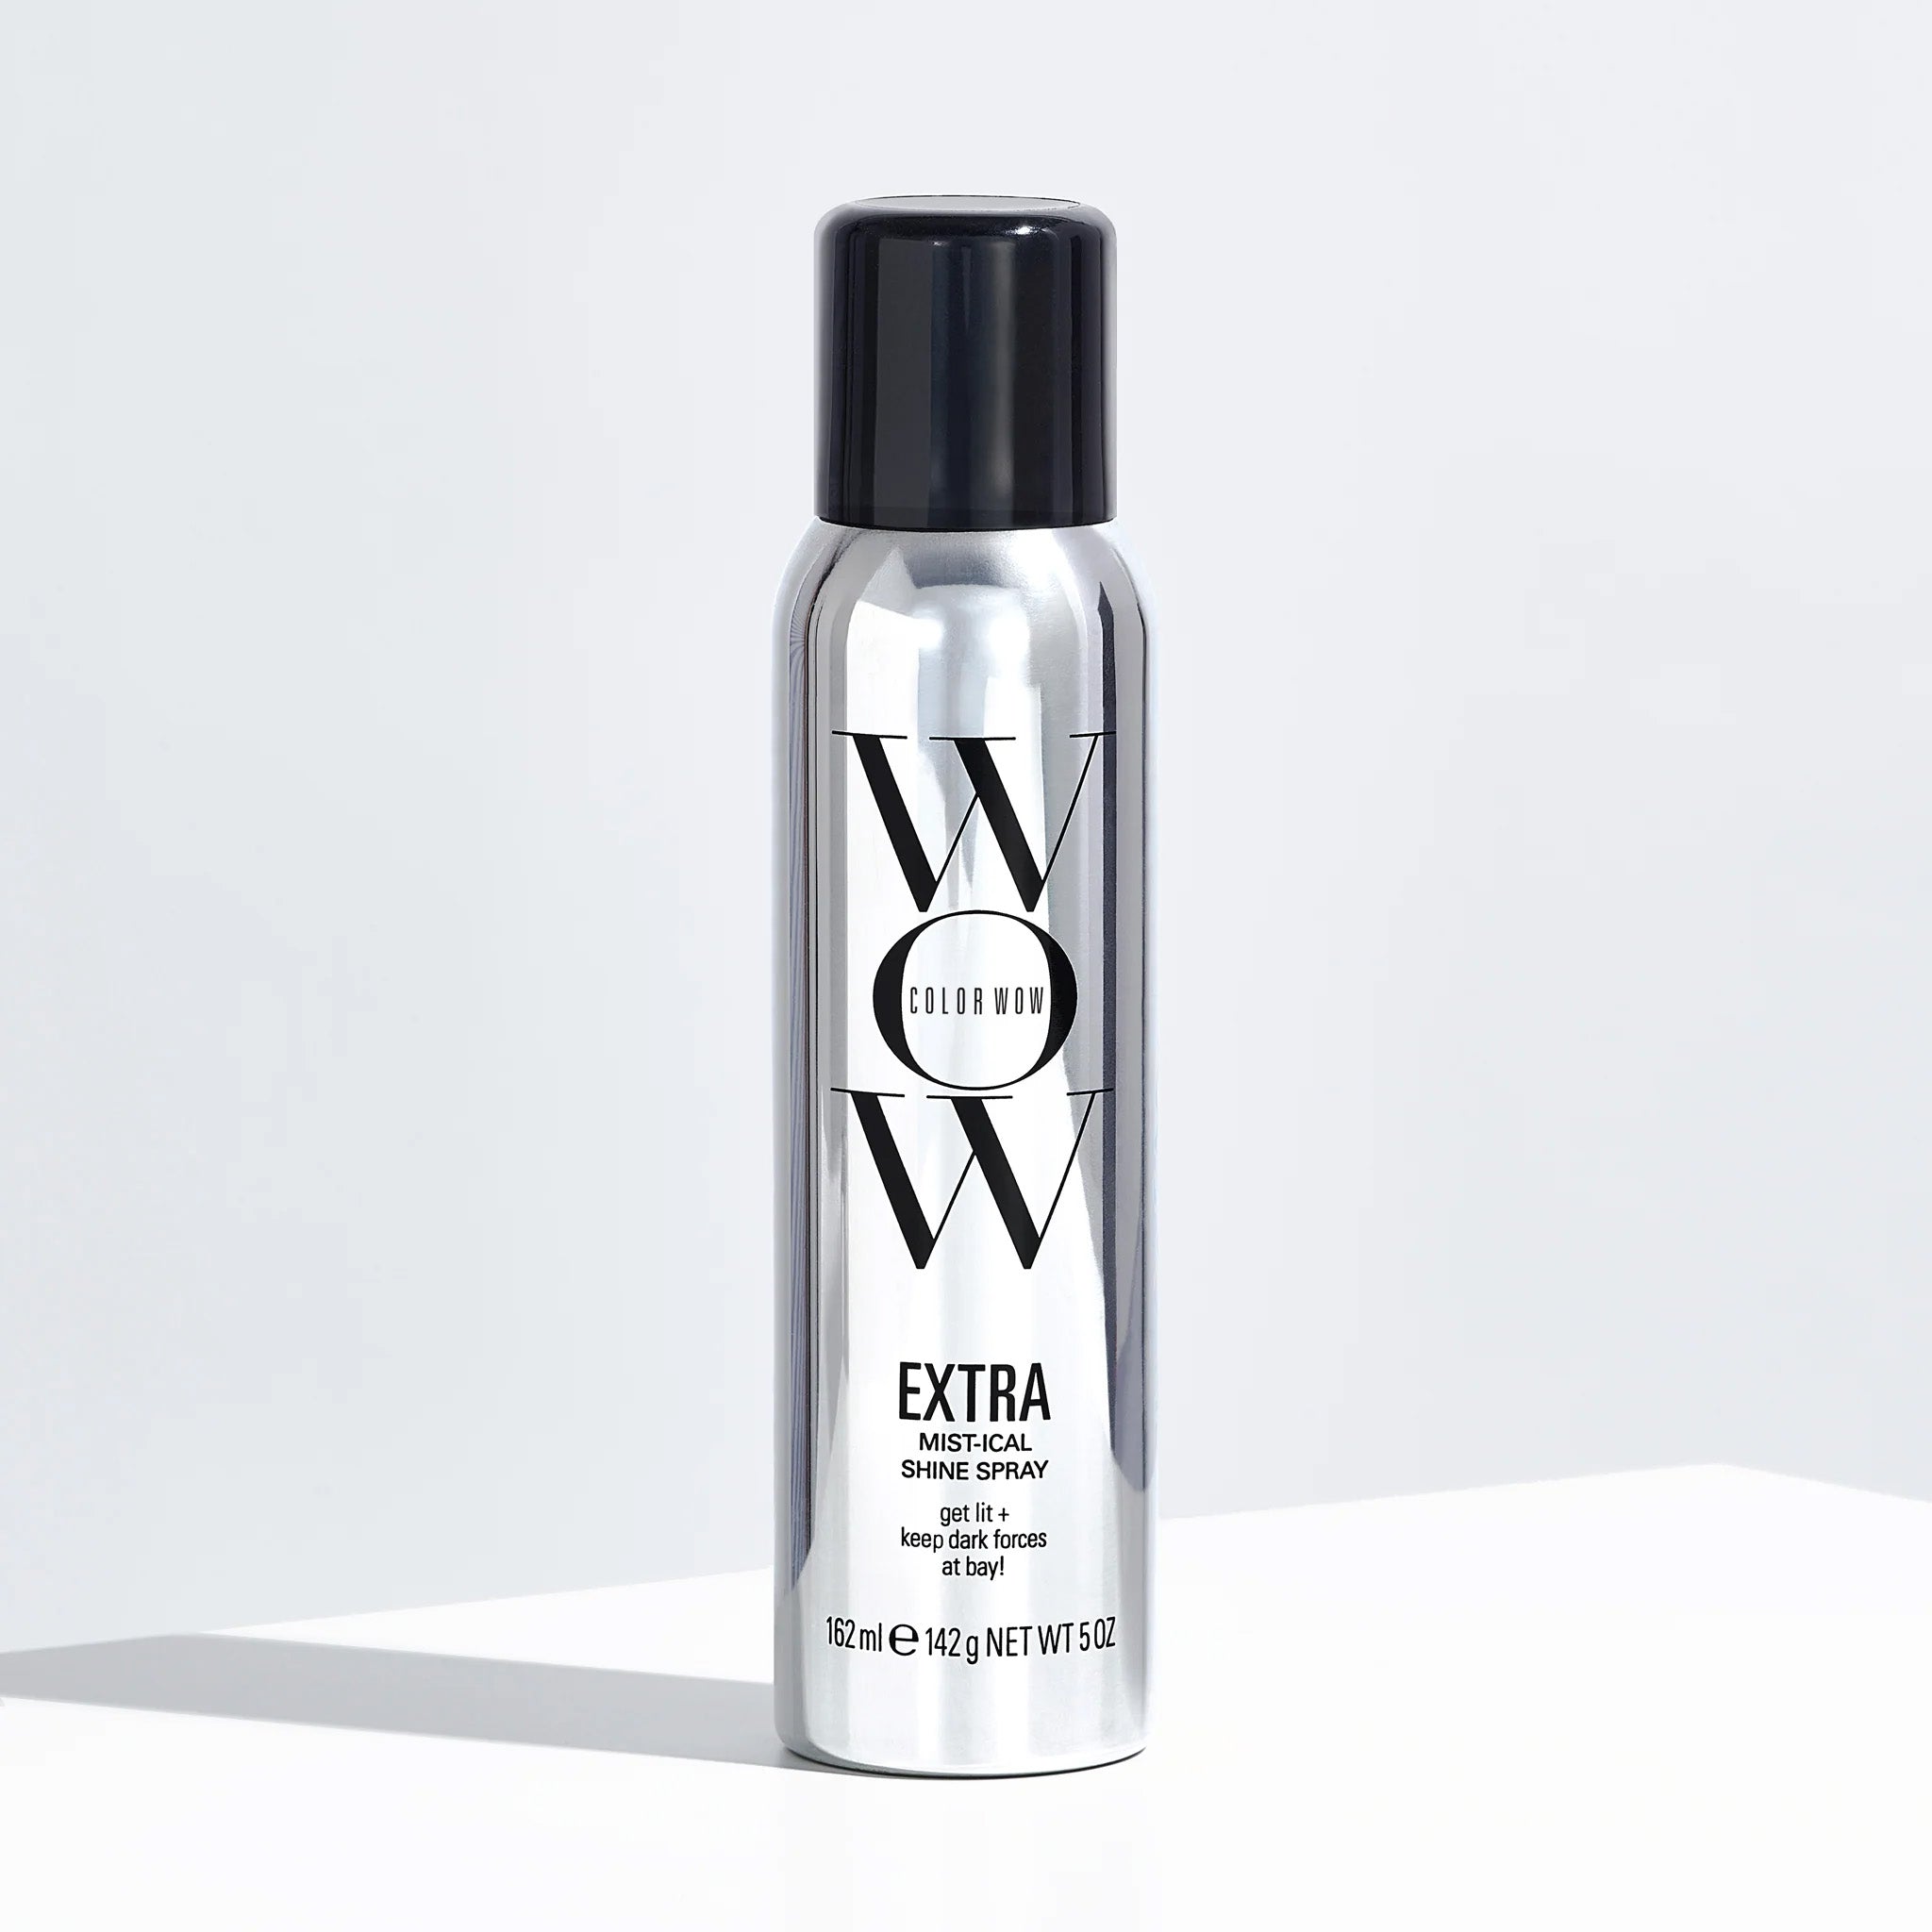 Color Wow - Extra Mist-ical Shine Spray 5 oz